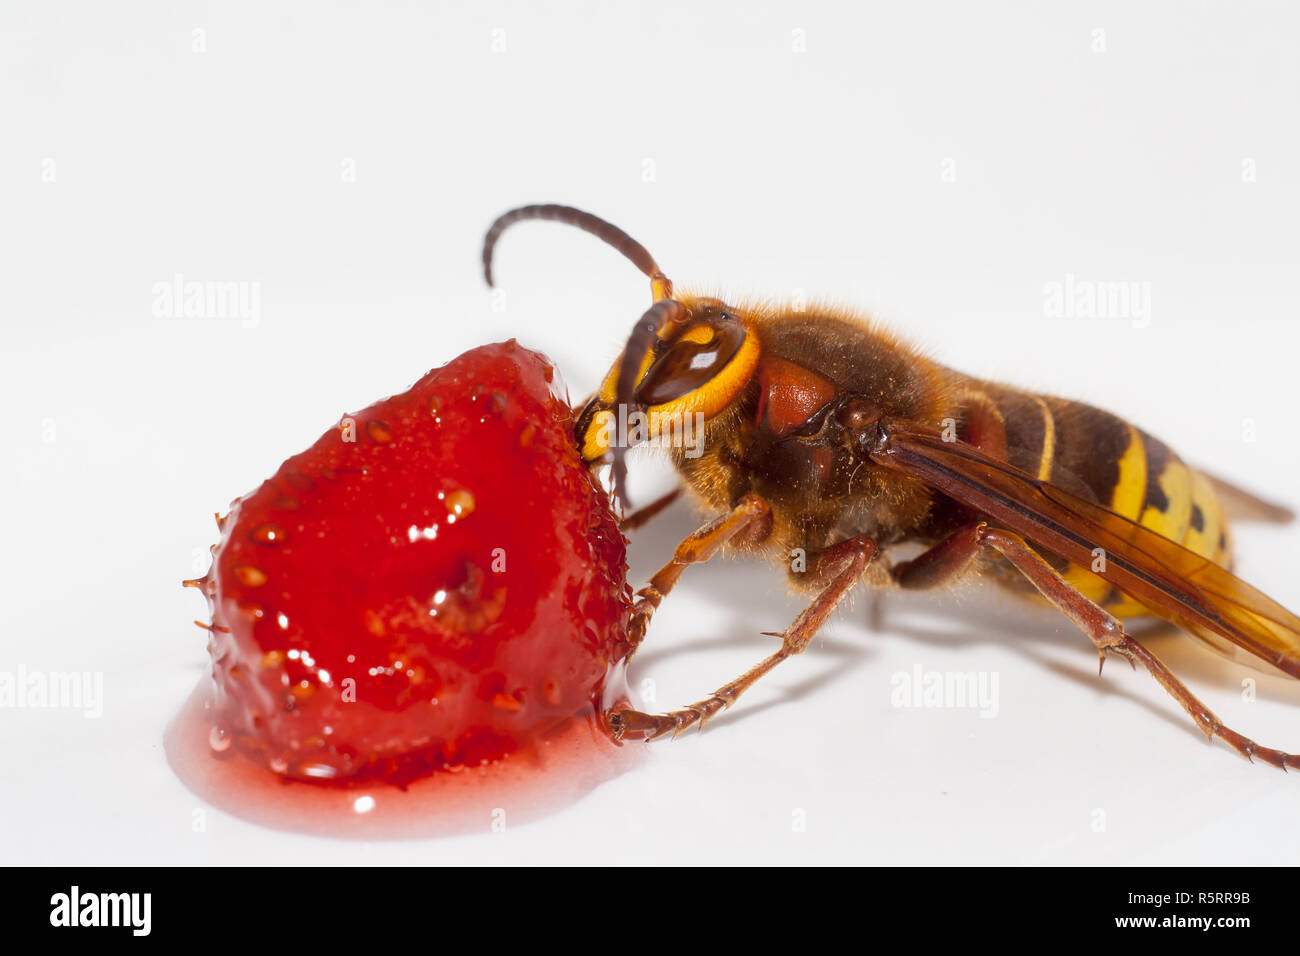 Grand vespa mandarinia hornet eating strawberry sur fond blanc Banque D'Images